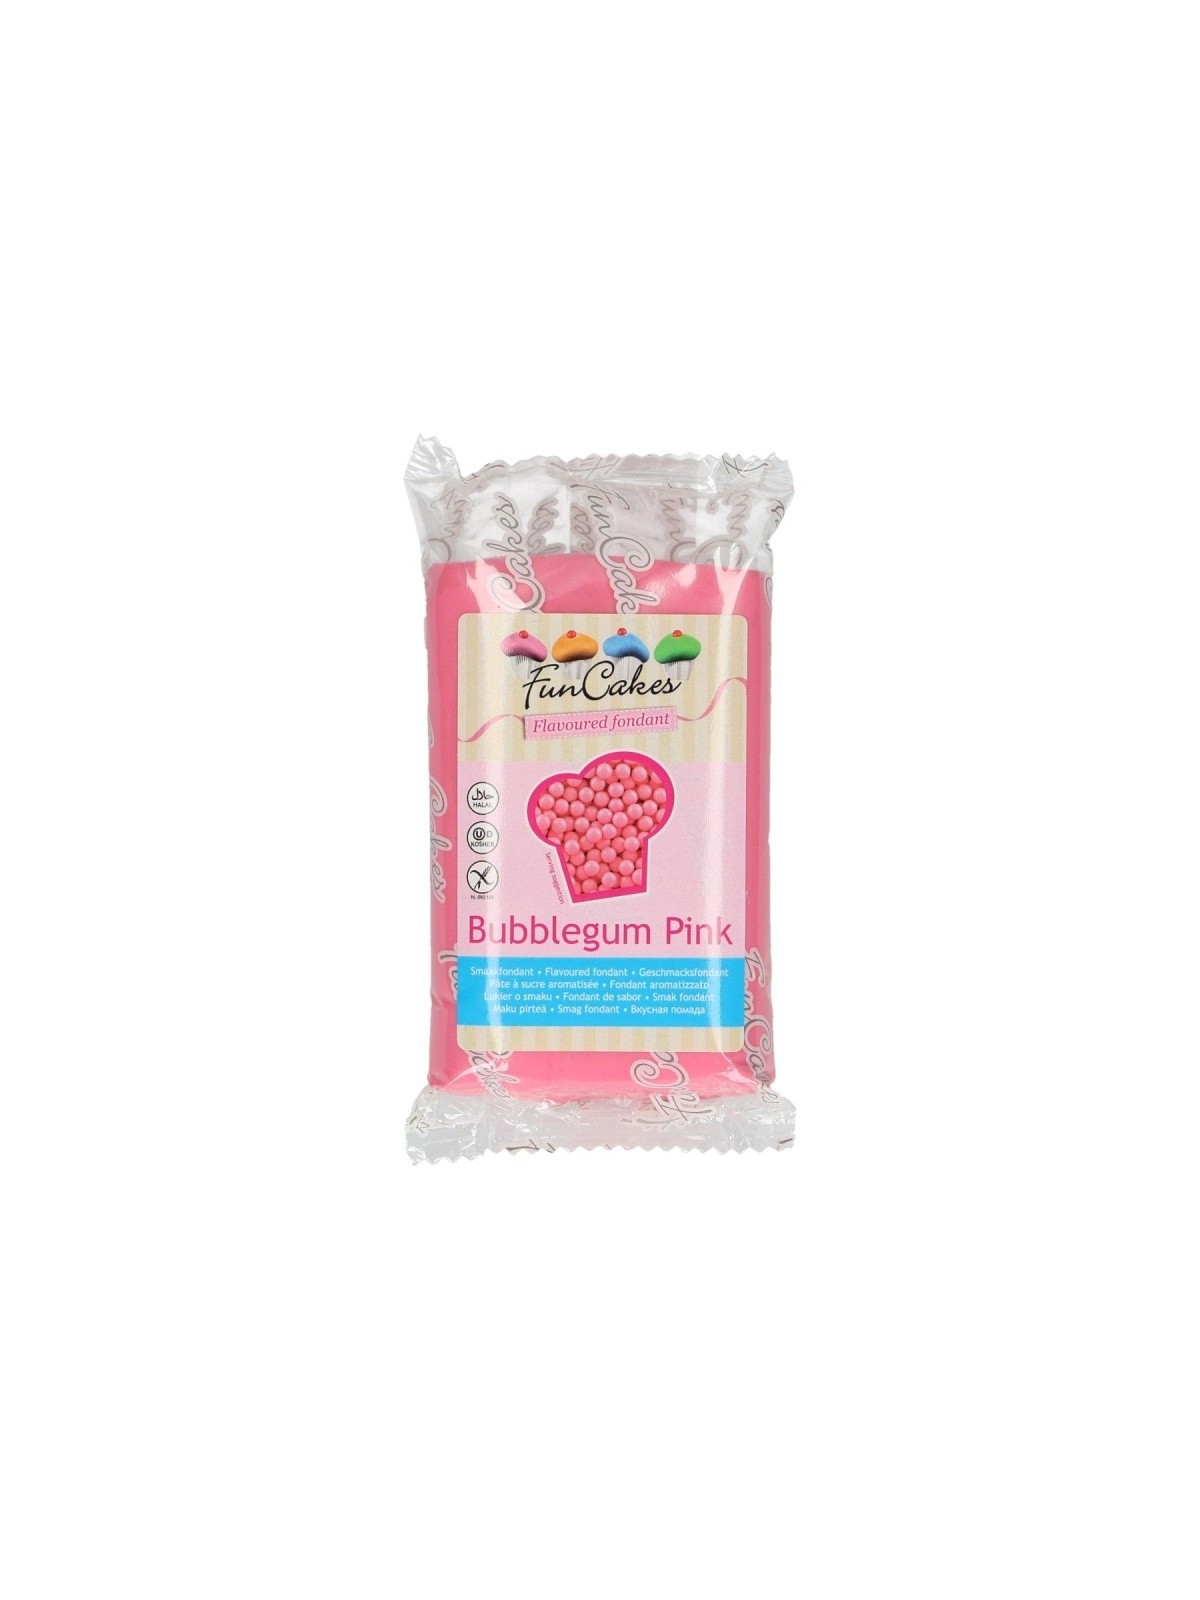 FunCakes Special Edition Flavoured Fondant - Bubblegum  pink -250g